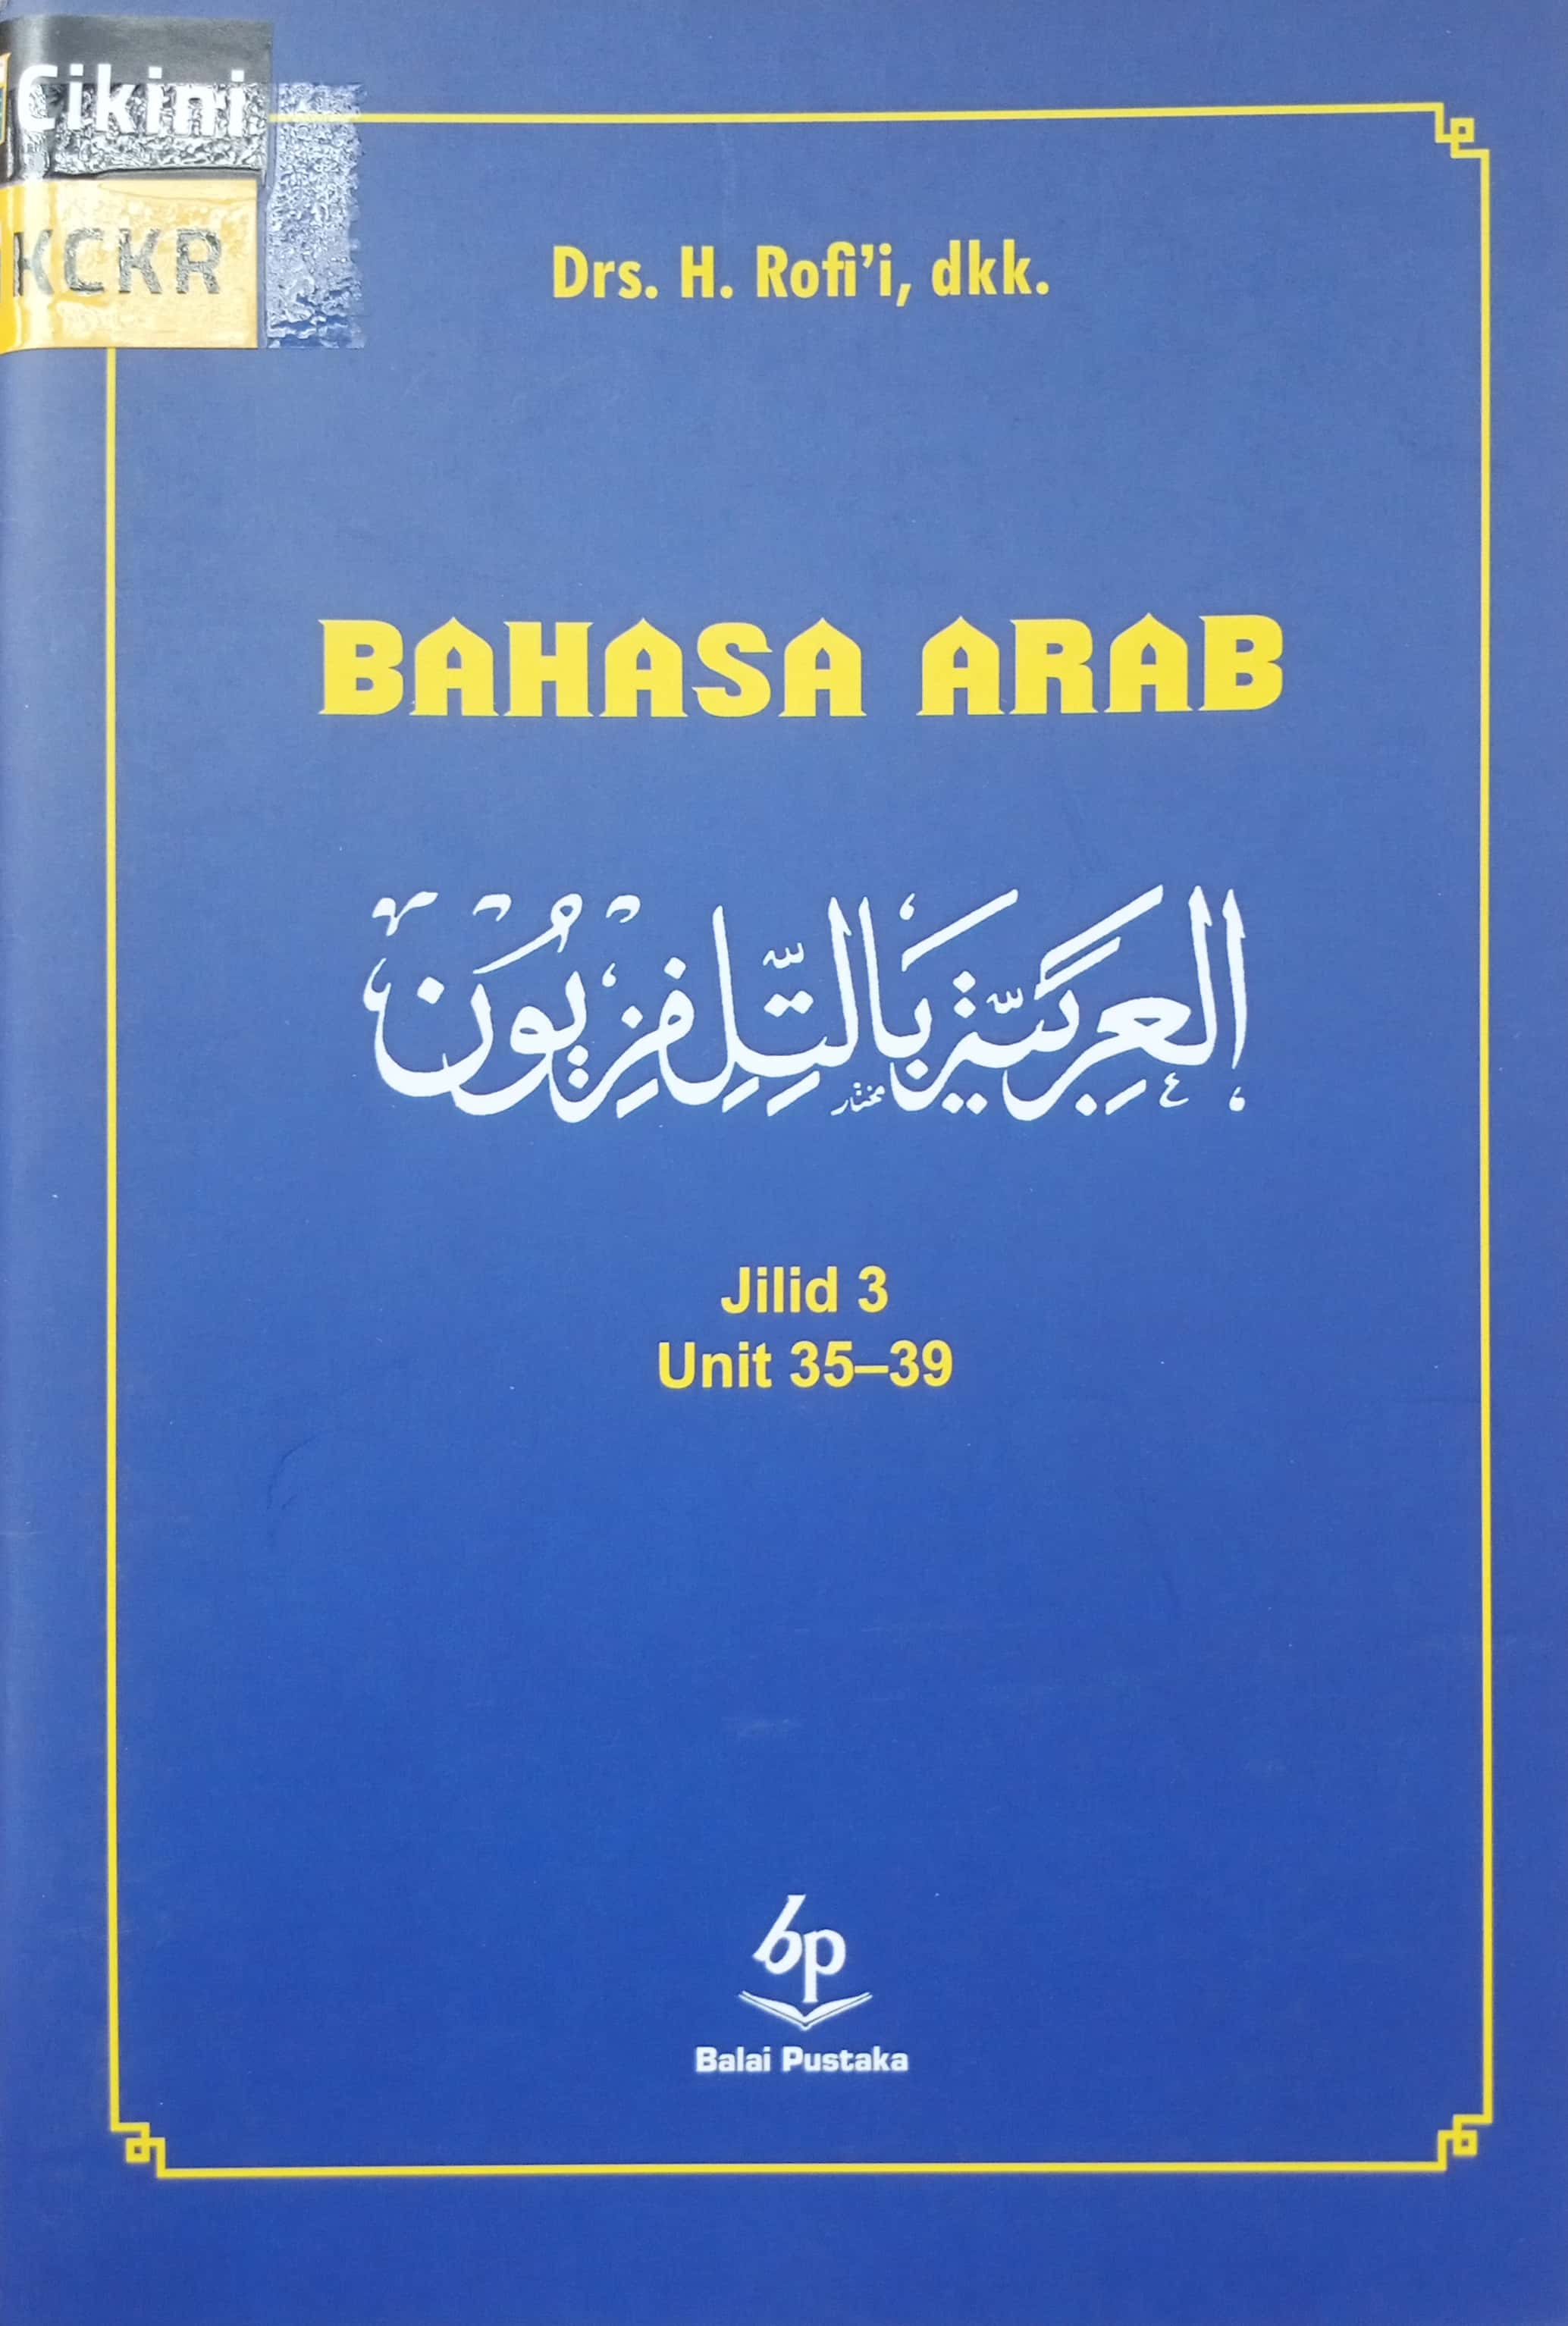 Bahasa Arab jilid 3 unit 35-39